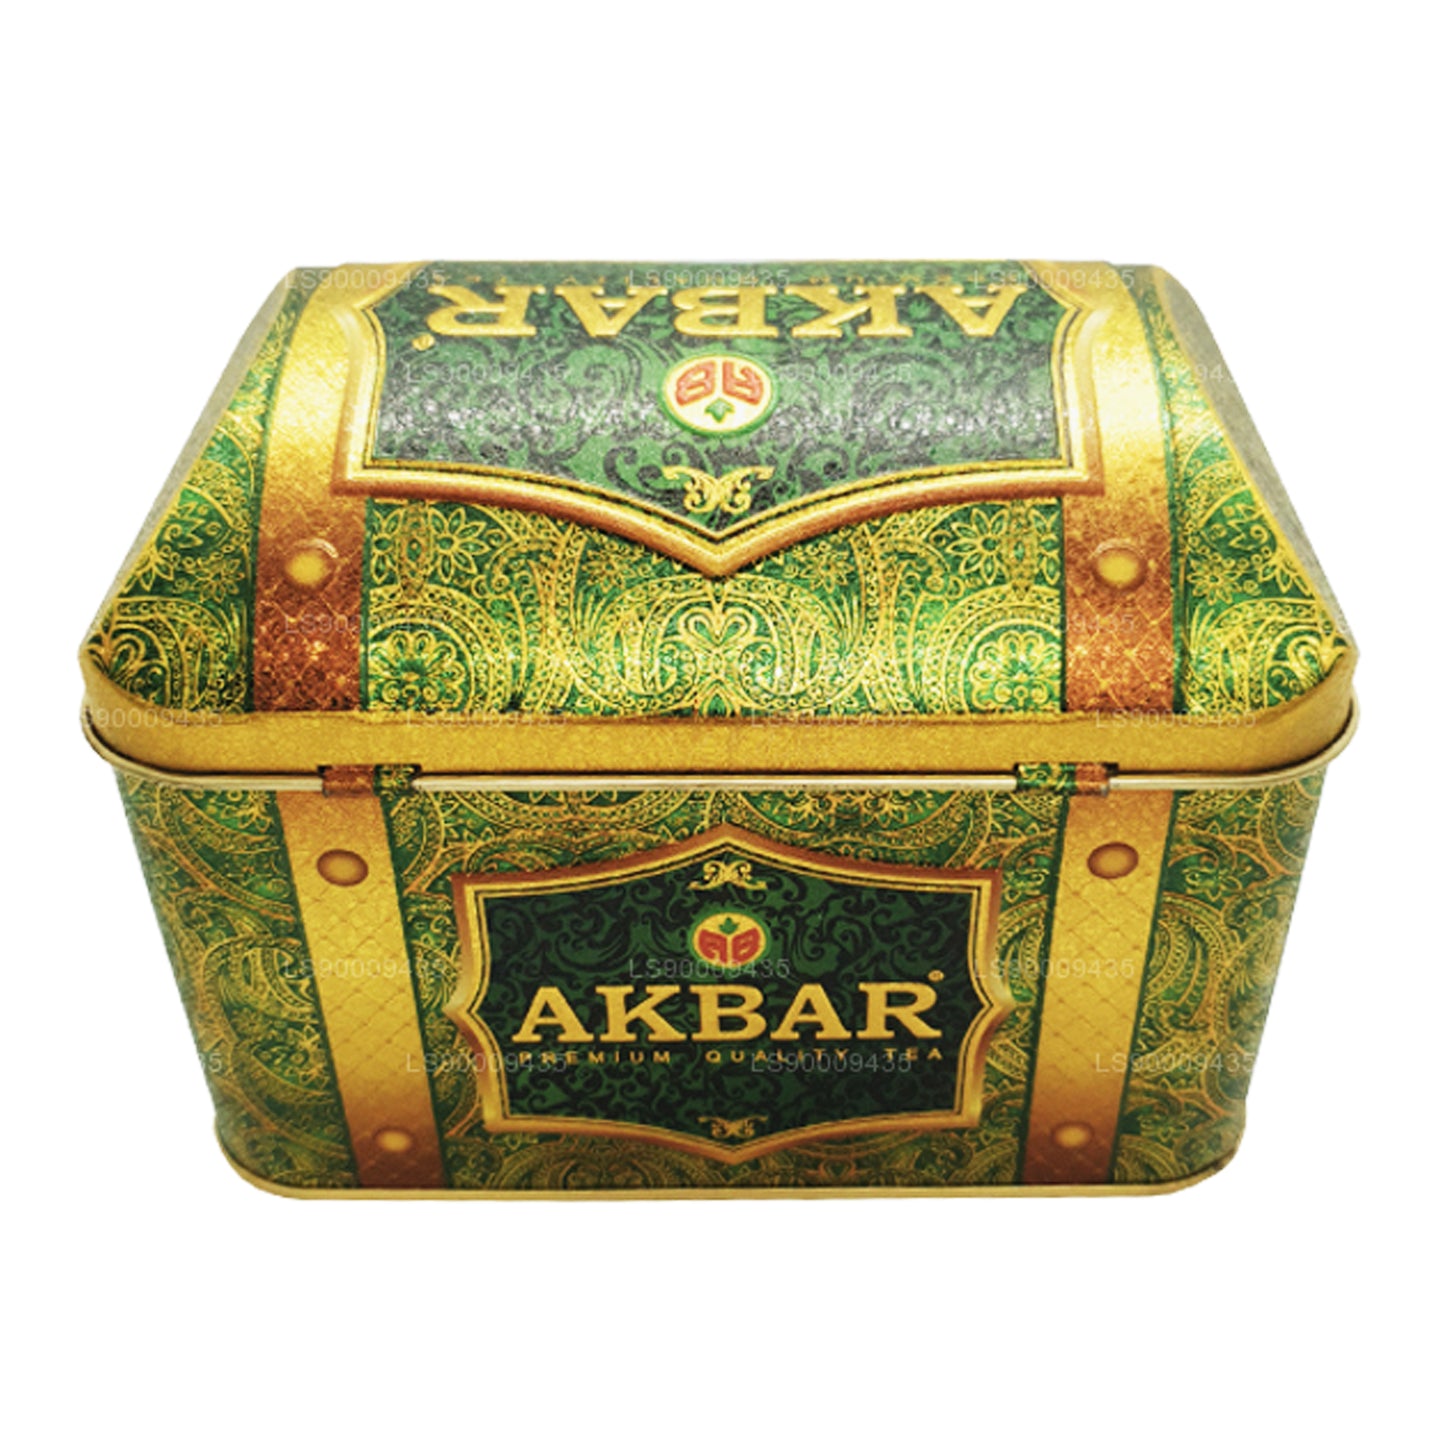 Akbar エクスクルーシブコレクションリッチサワーソップトレジャーボックス (250g)